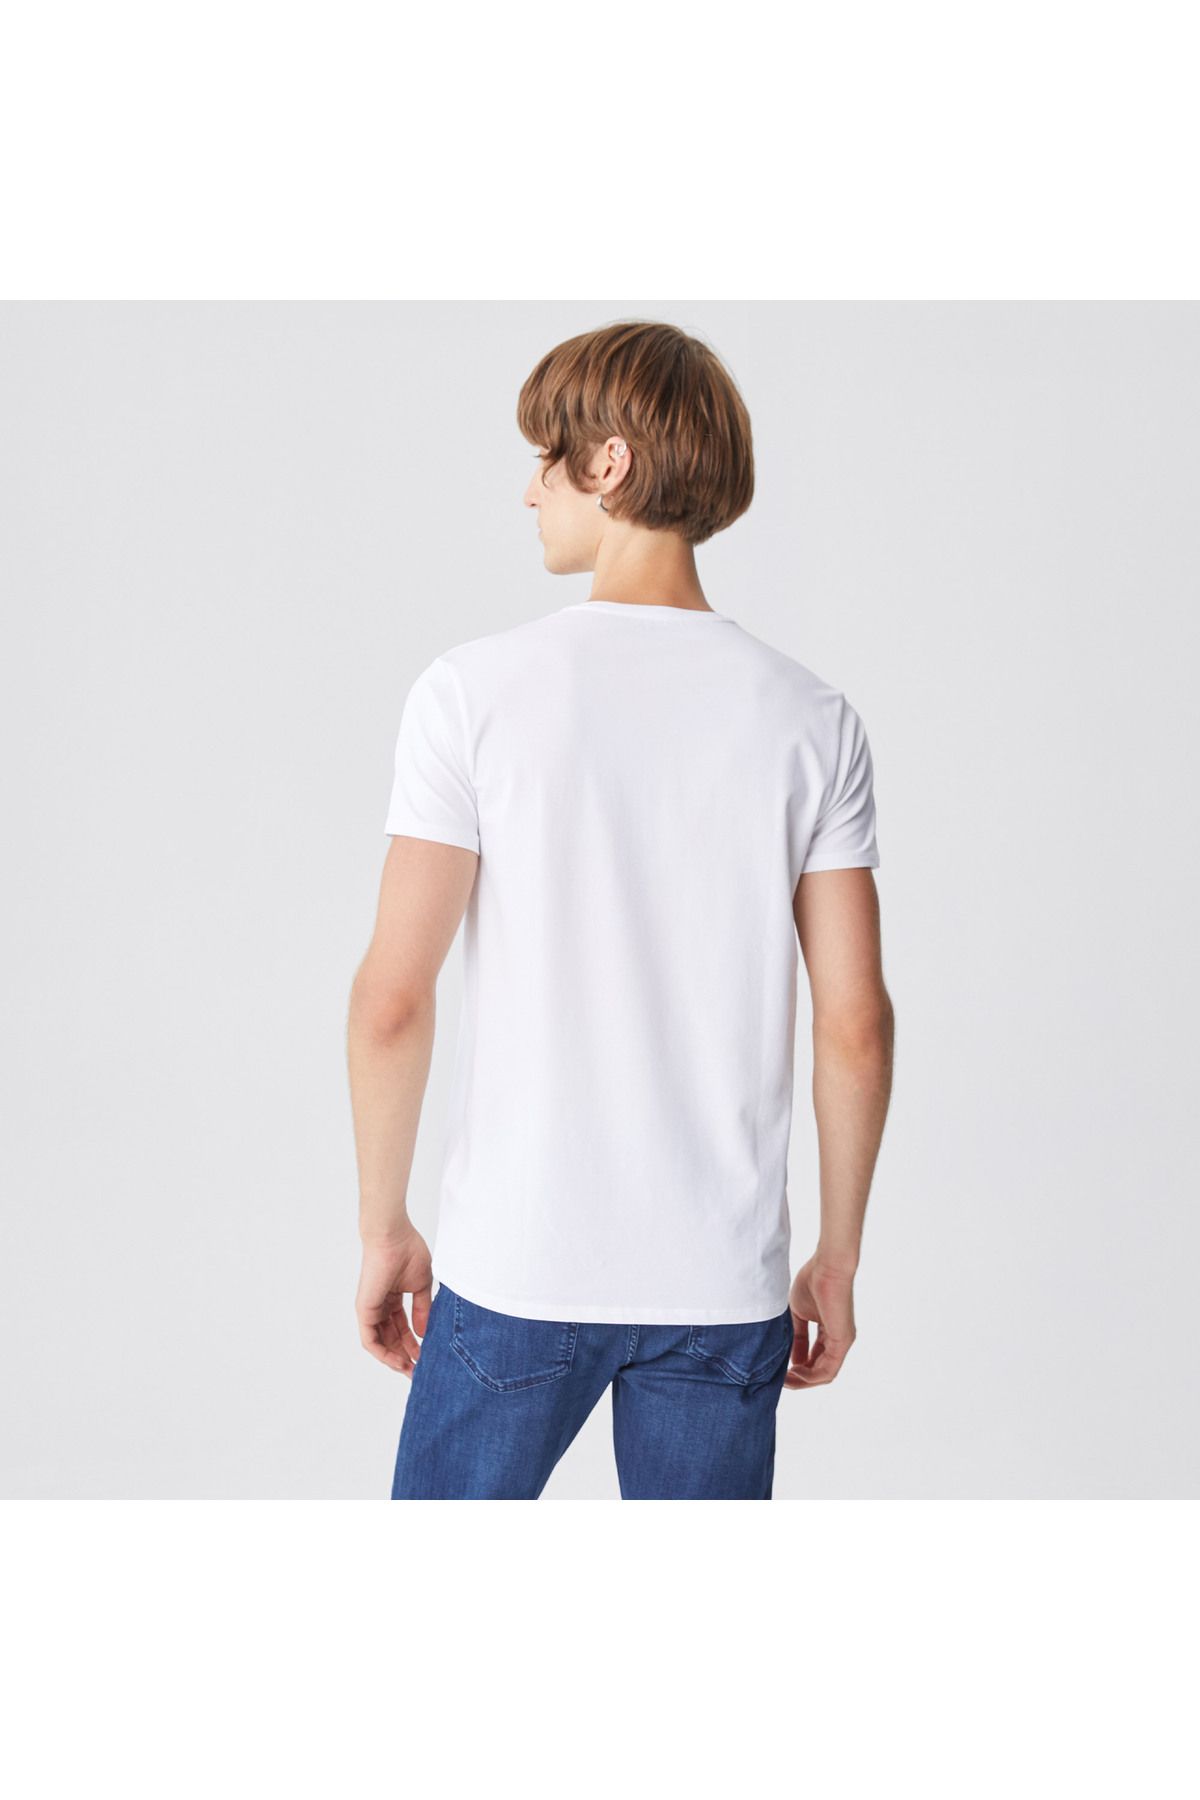 Lacoste تی شرت سفید V- گردن باریک مردان